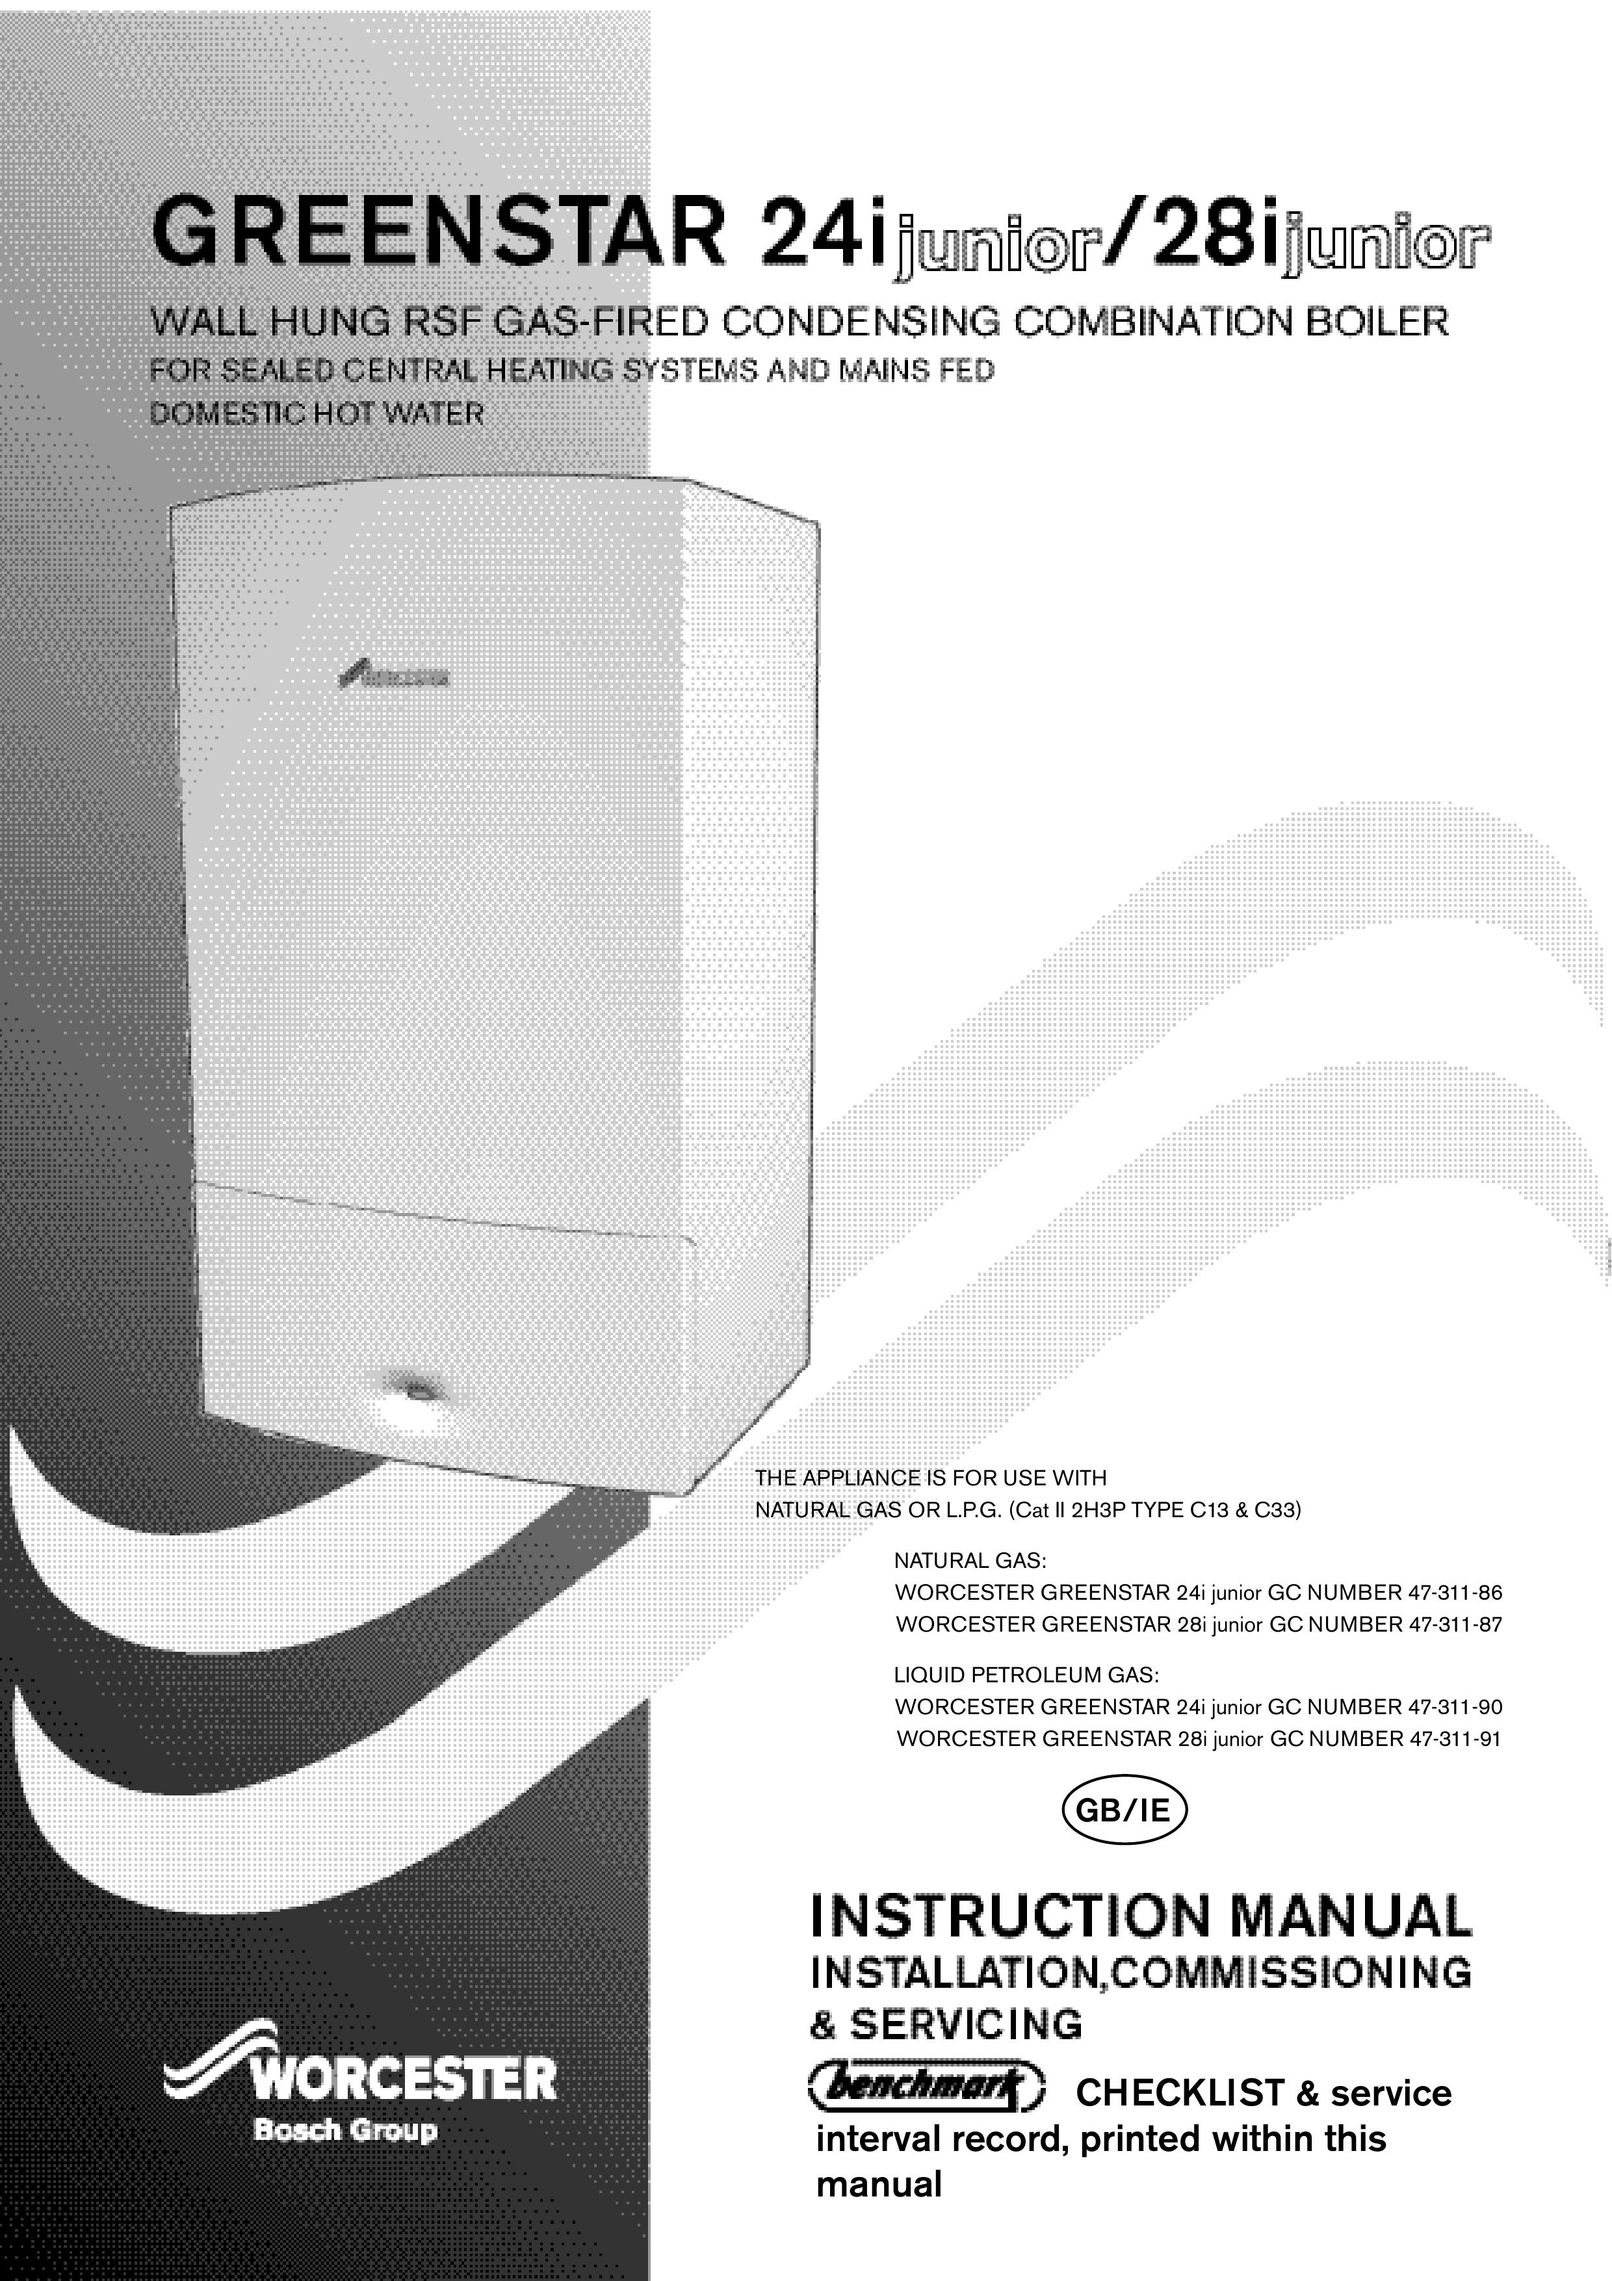 Bosch Appliances 28i junior Boiler User Manual